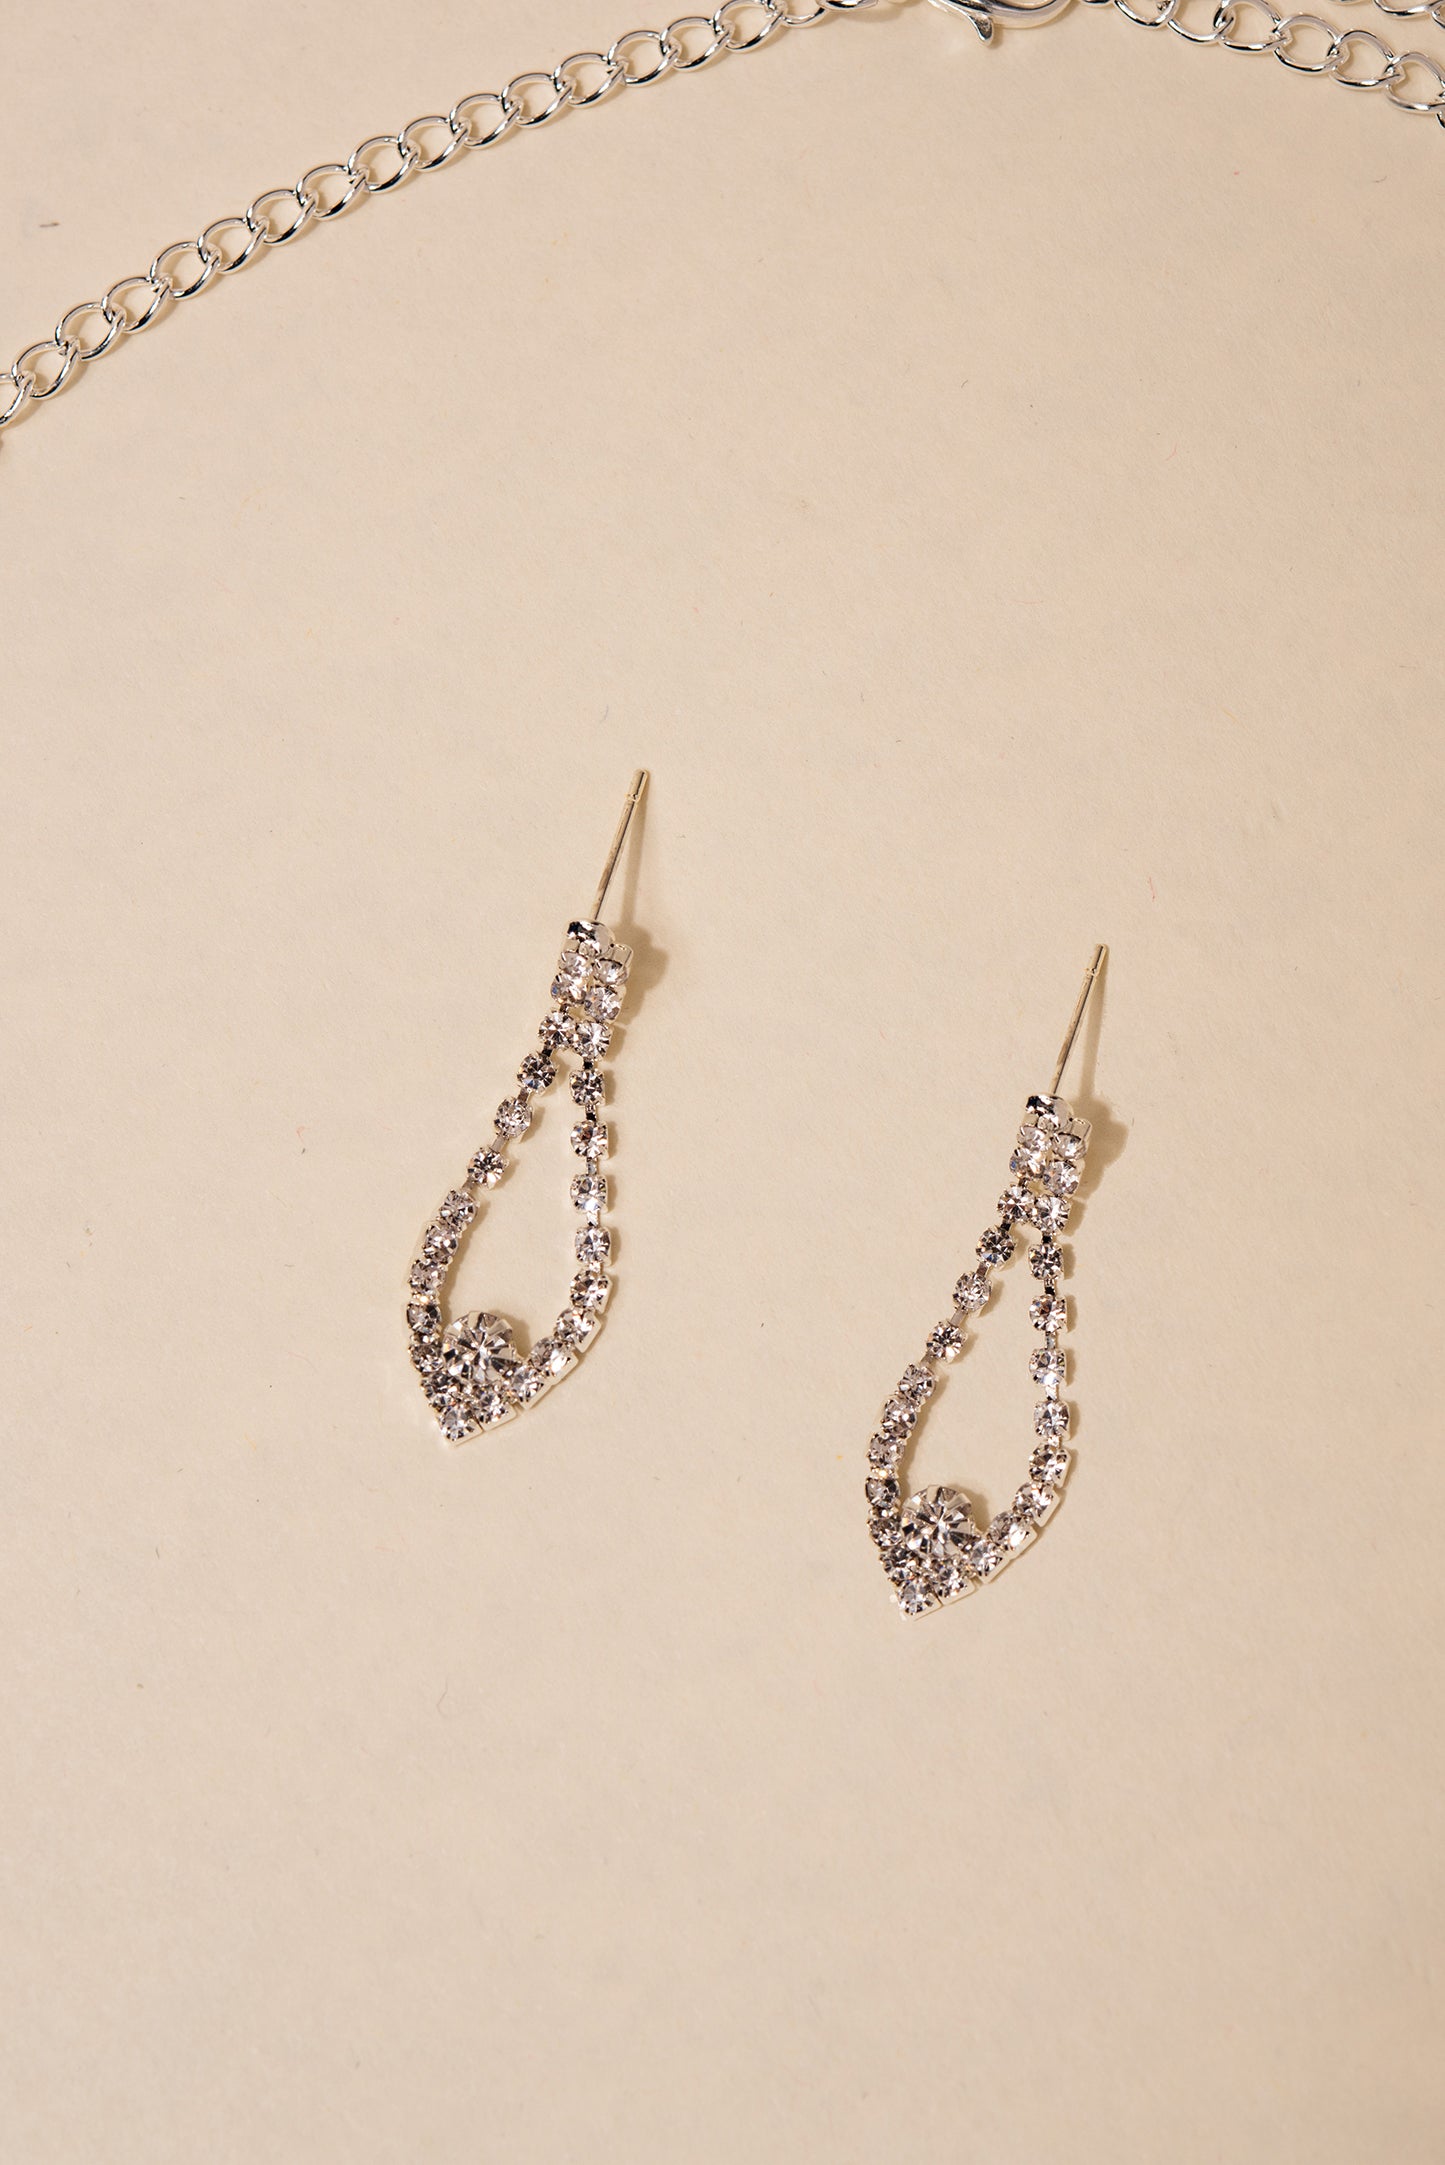 Mabeline Rhinestone Pave Fringe w/ Scallops Necklace & Earrings Set - Silver